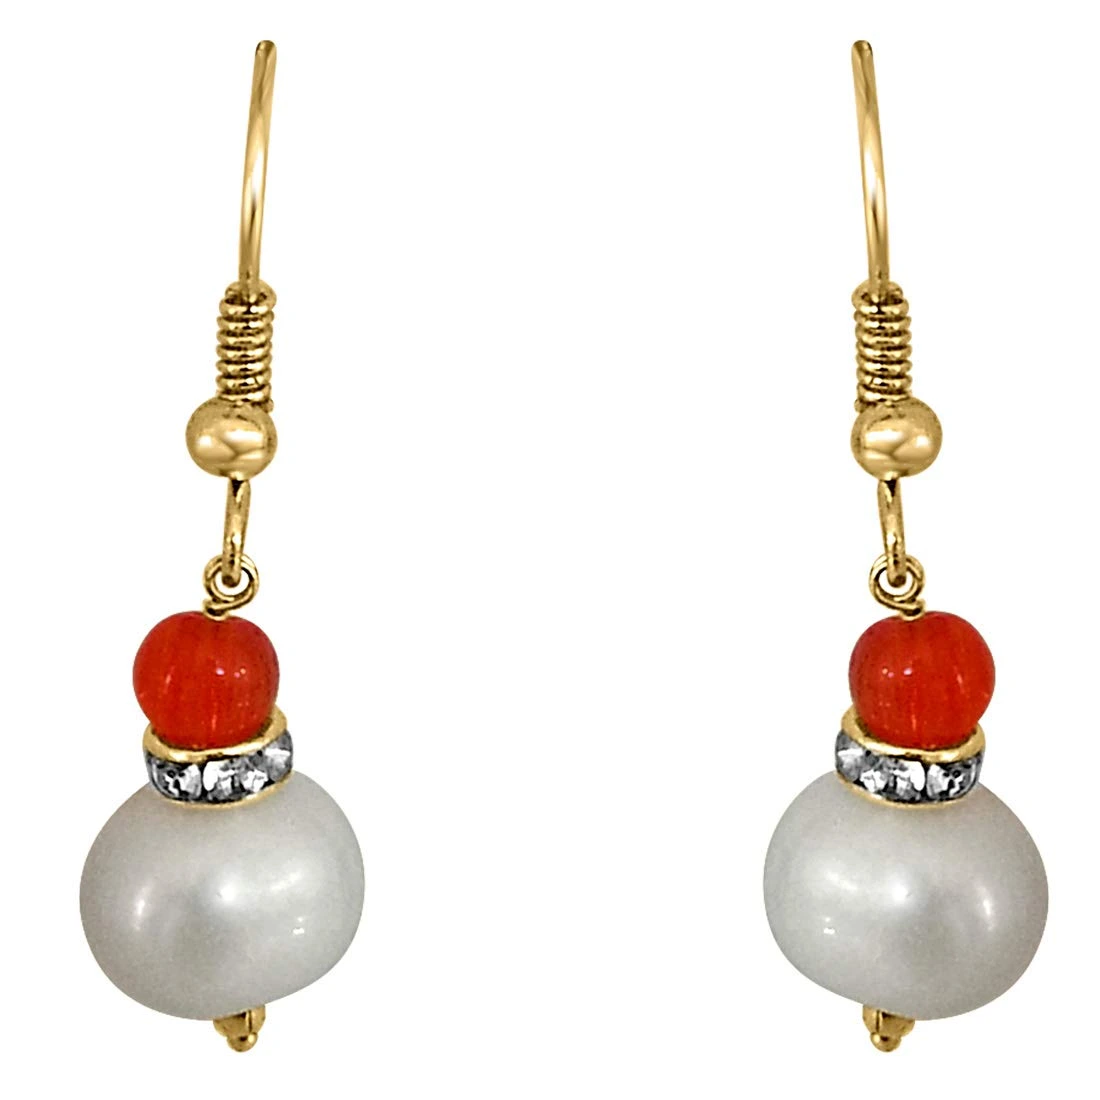 Real Big Pearl & Orange Stone Earrings for Women (SE212)